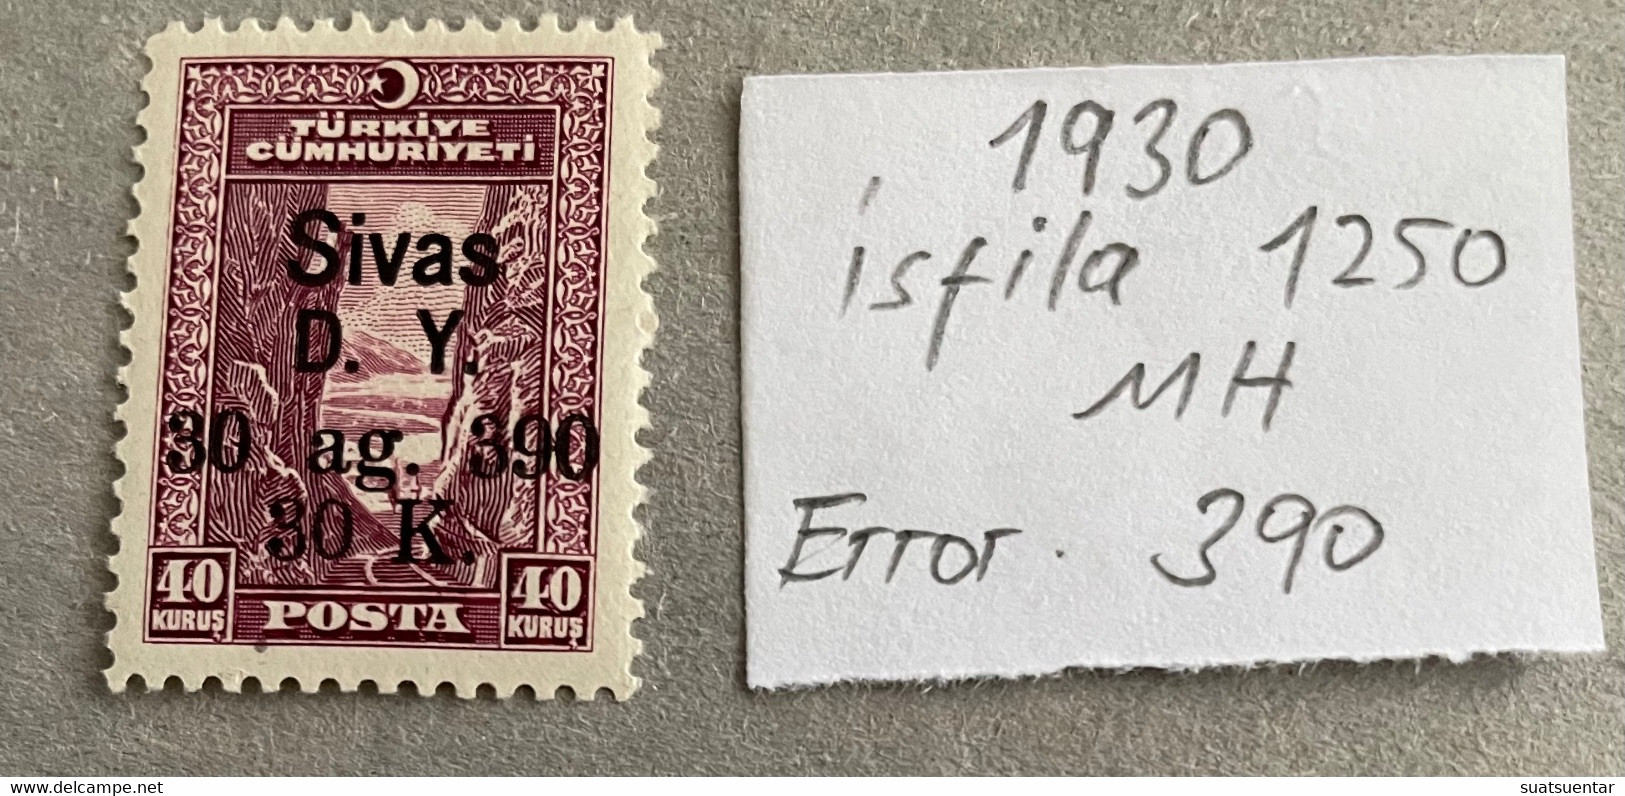 1930 Sivas-Ankara Railway Stamps Error   390 MH Isfila 1250 - Unused Stamps